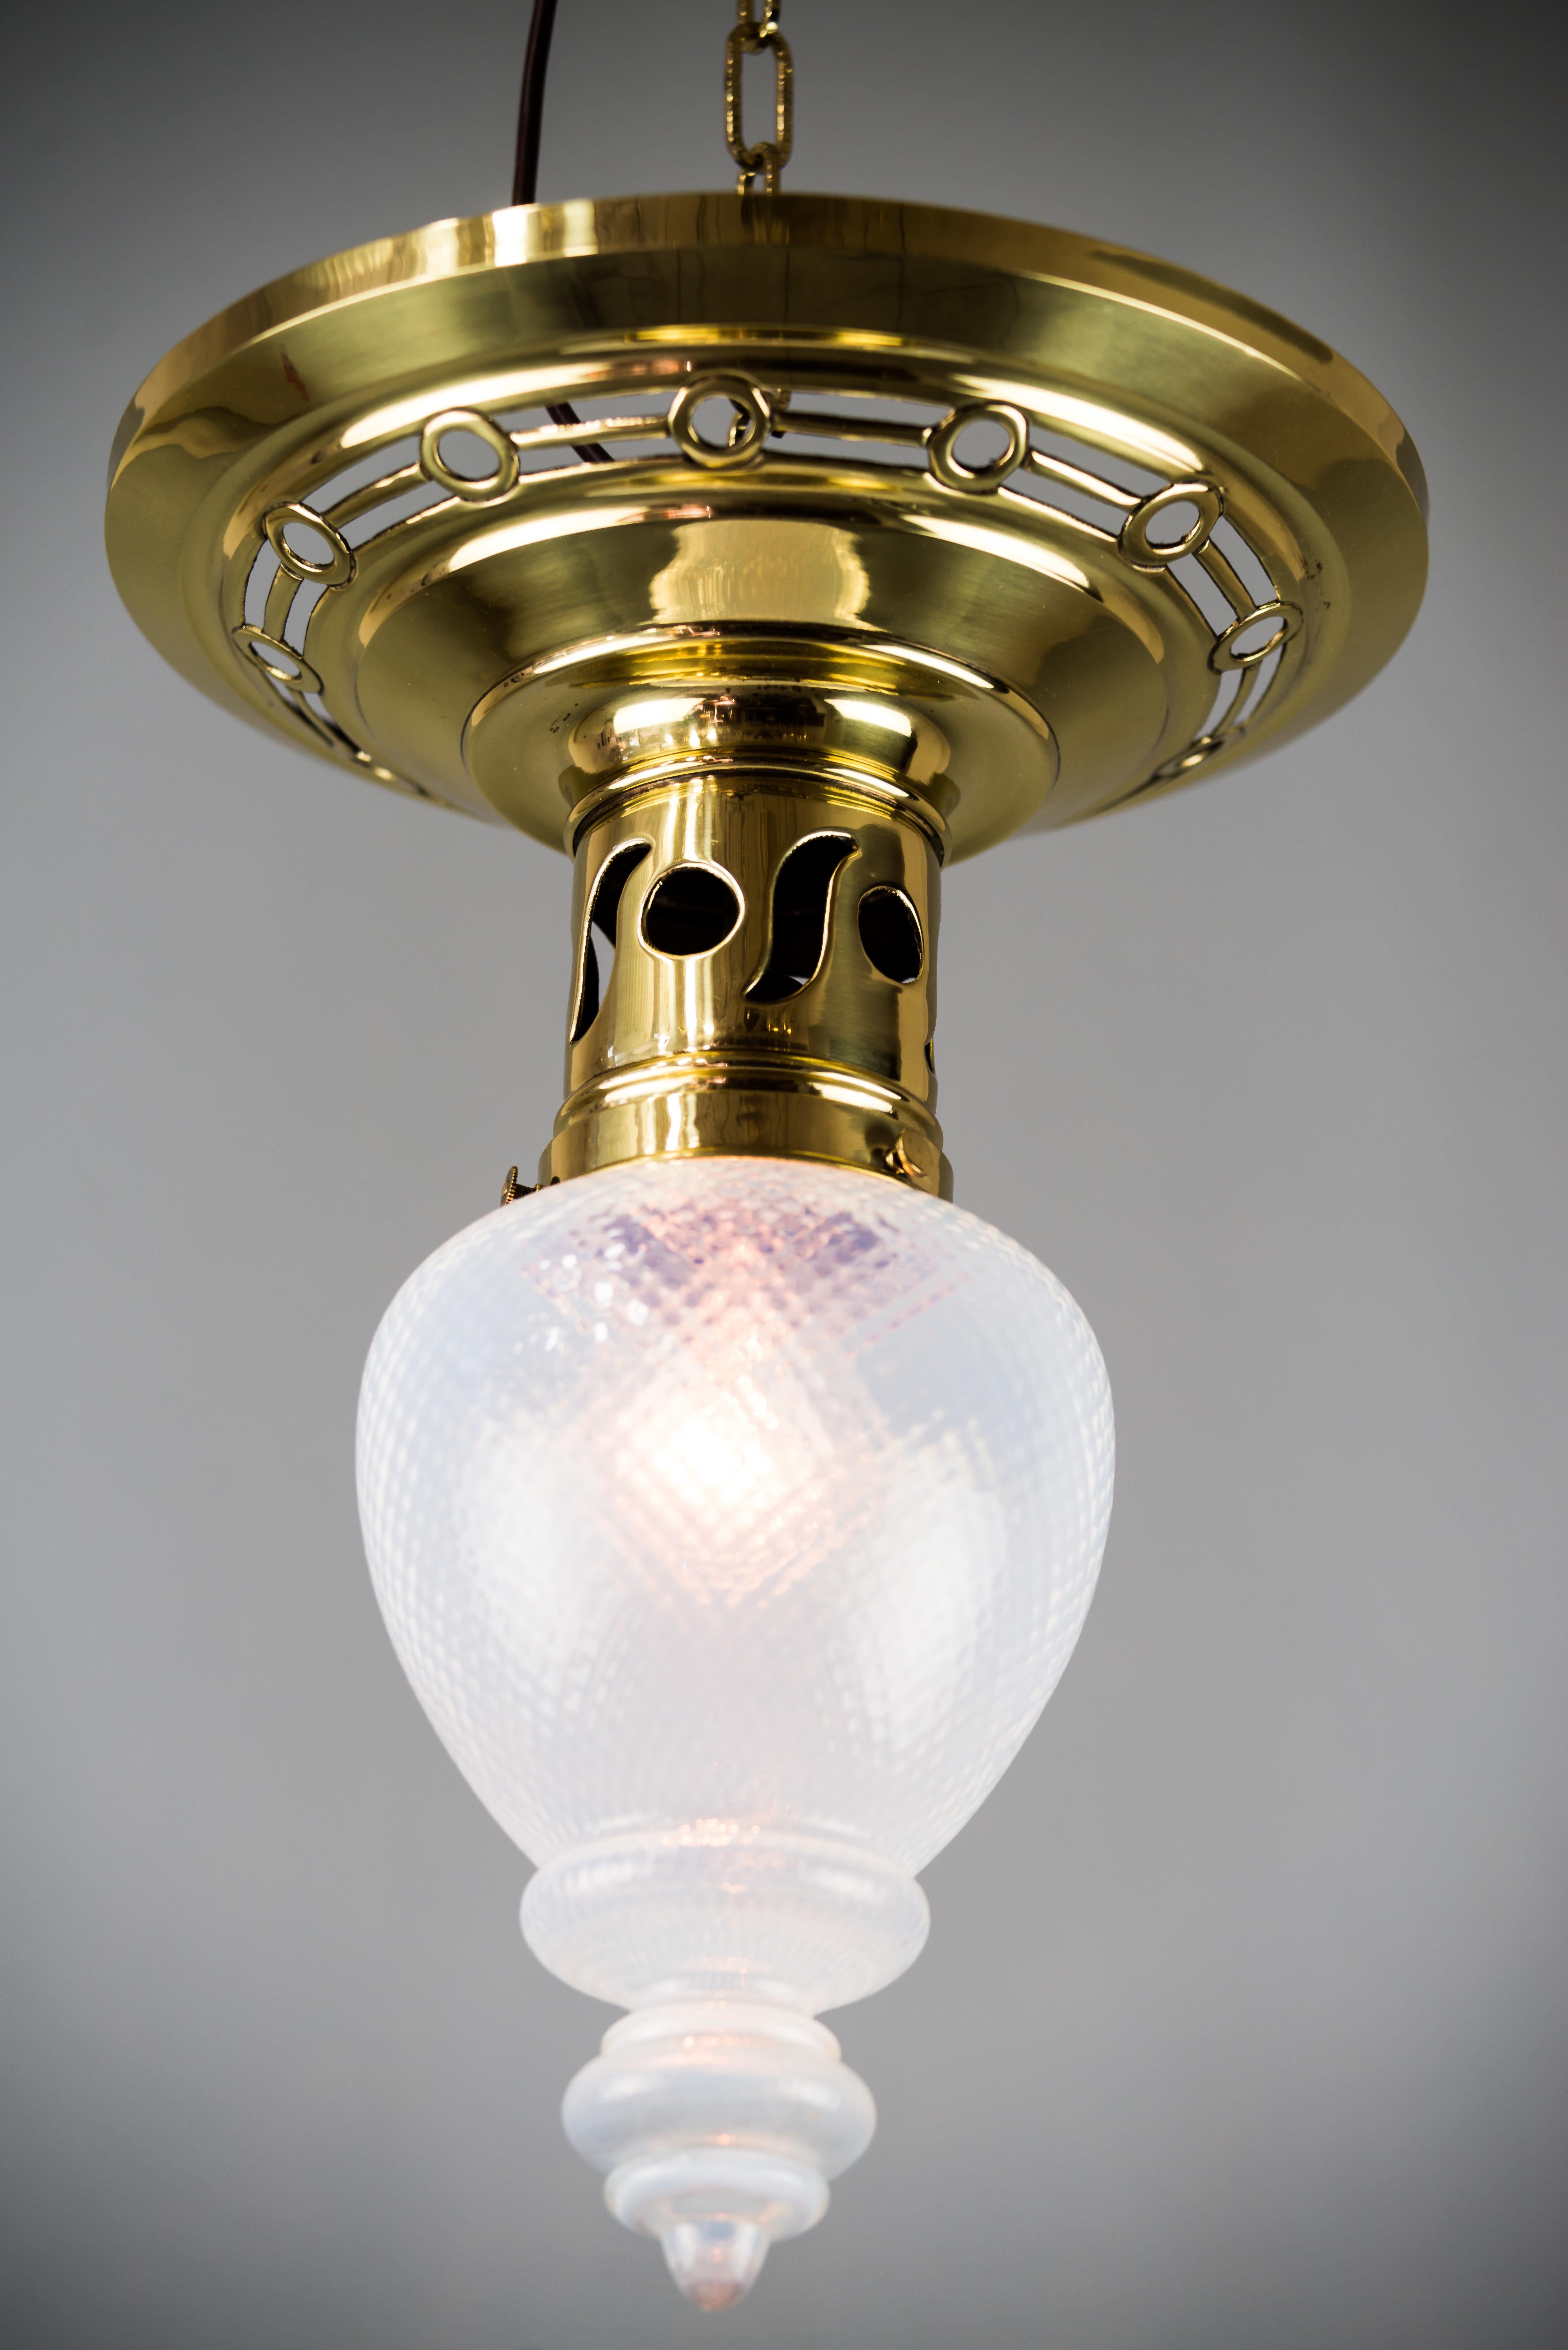 Jugendstil Ceiling Lamp circa 1908 with Original Opaline Glass Shade 1